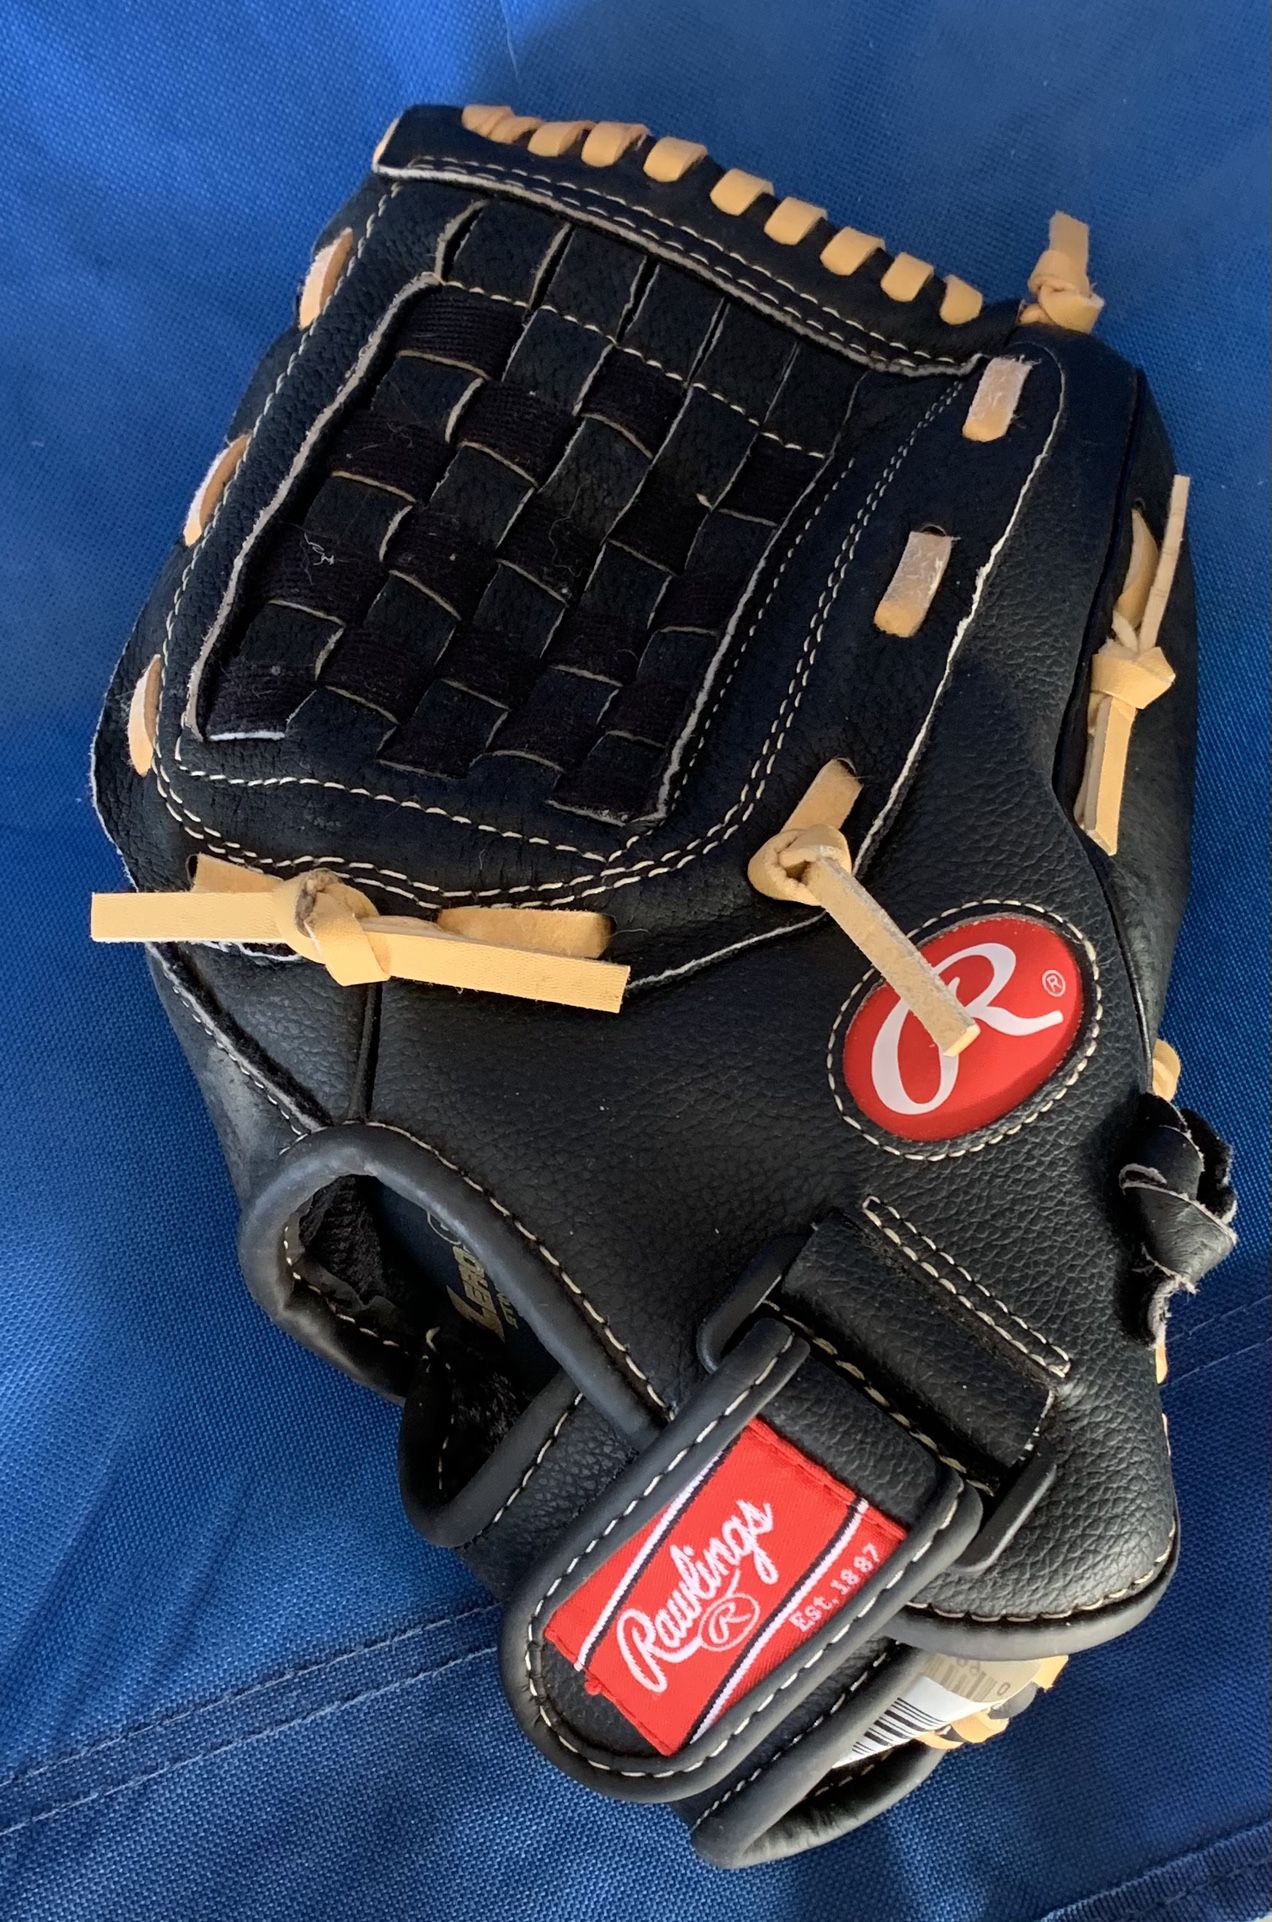 Baseball / Softball Glove Brand New Rawlings Never Used 13